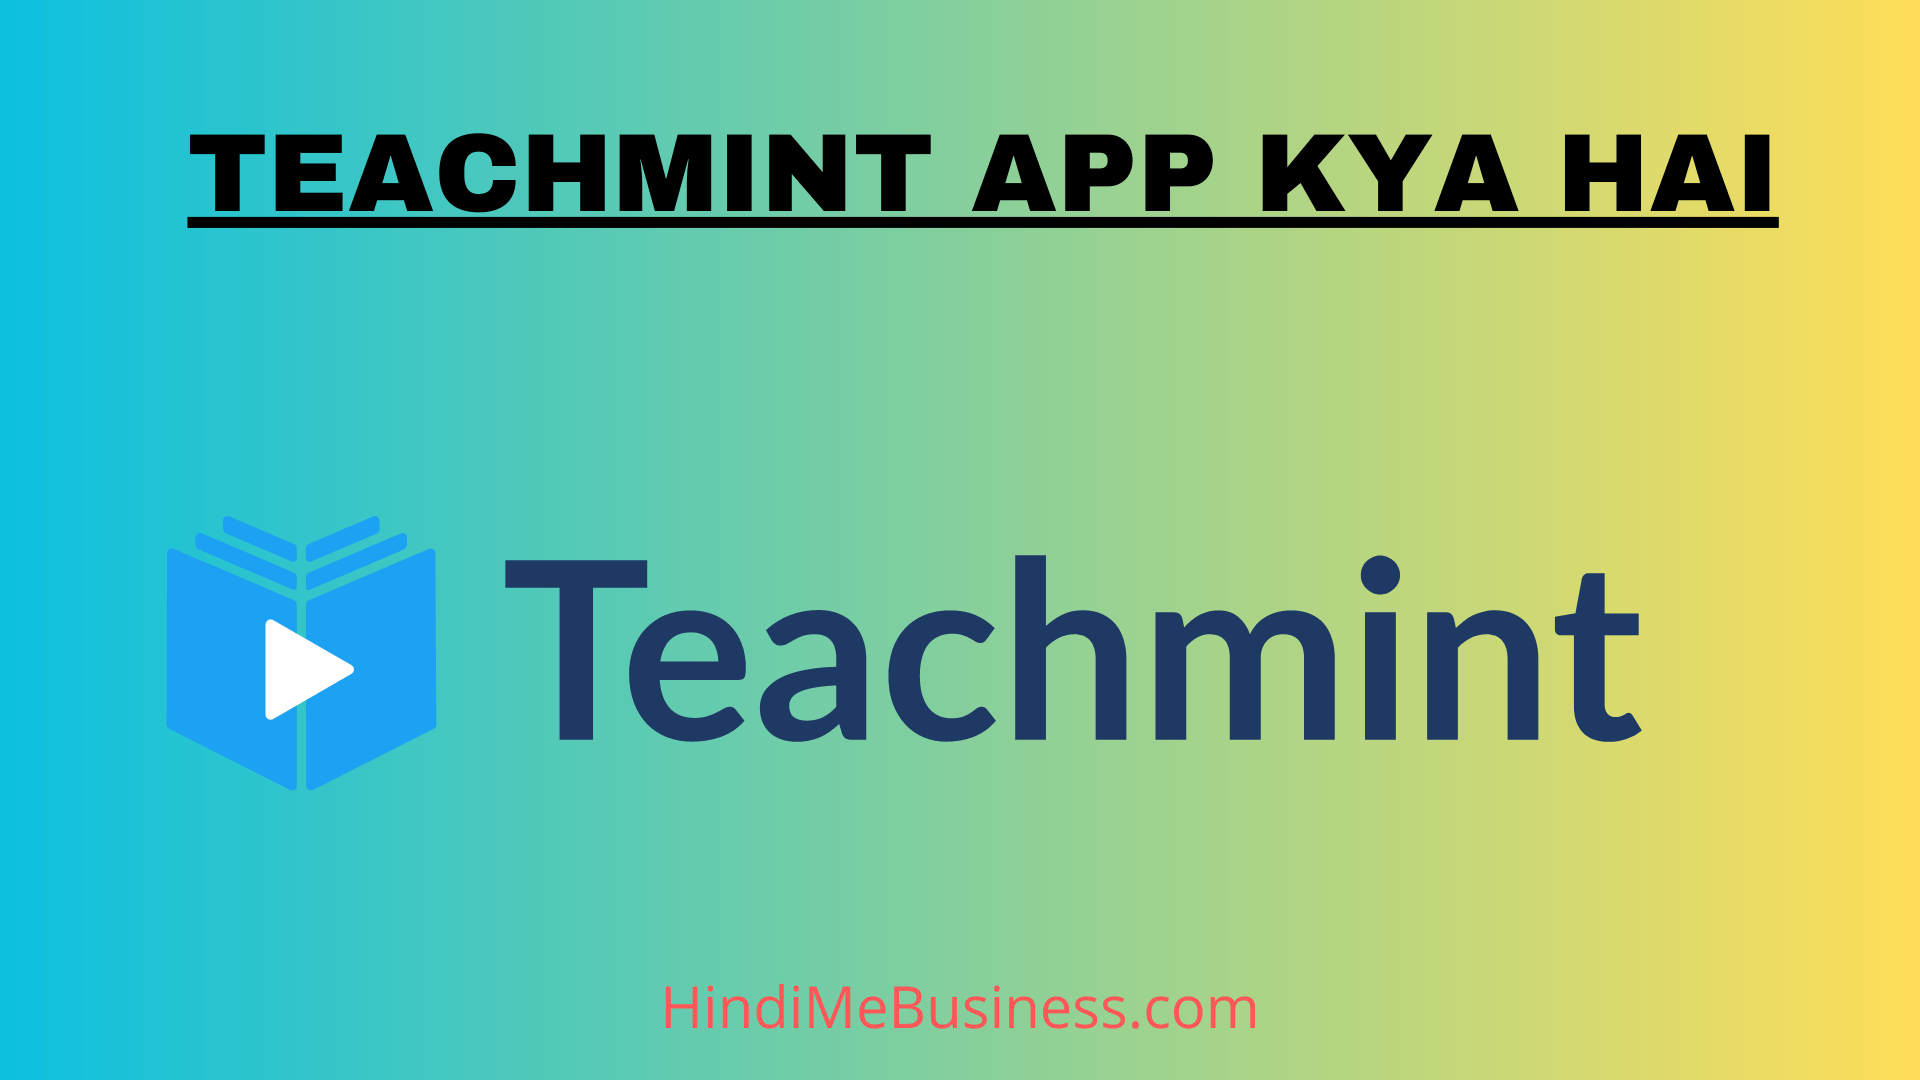 Teachmint app kya hai